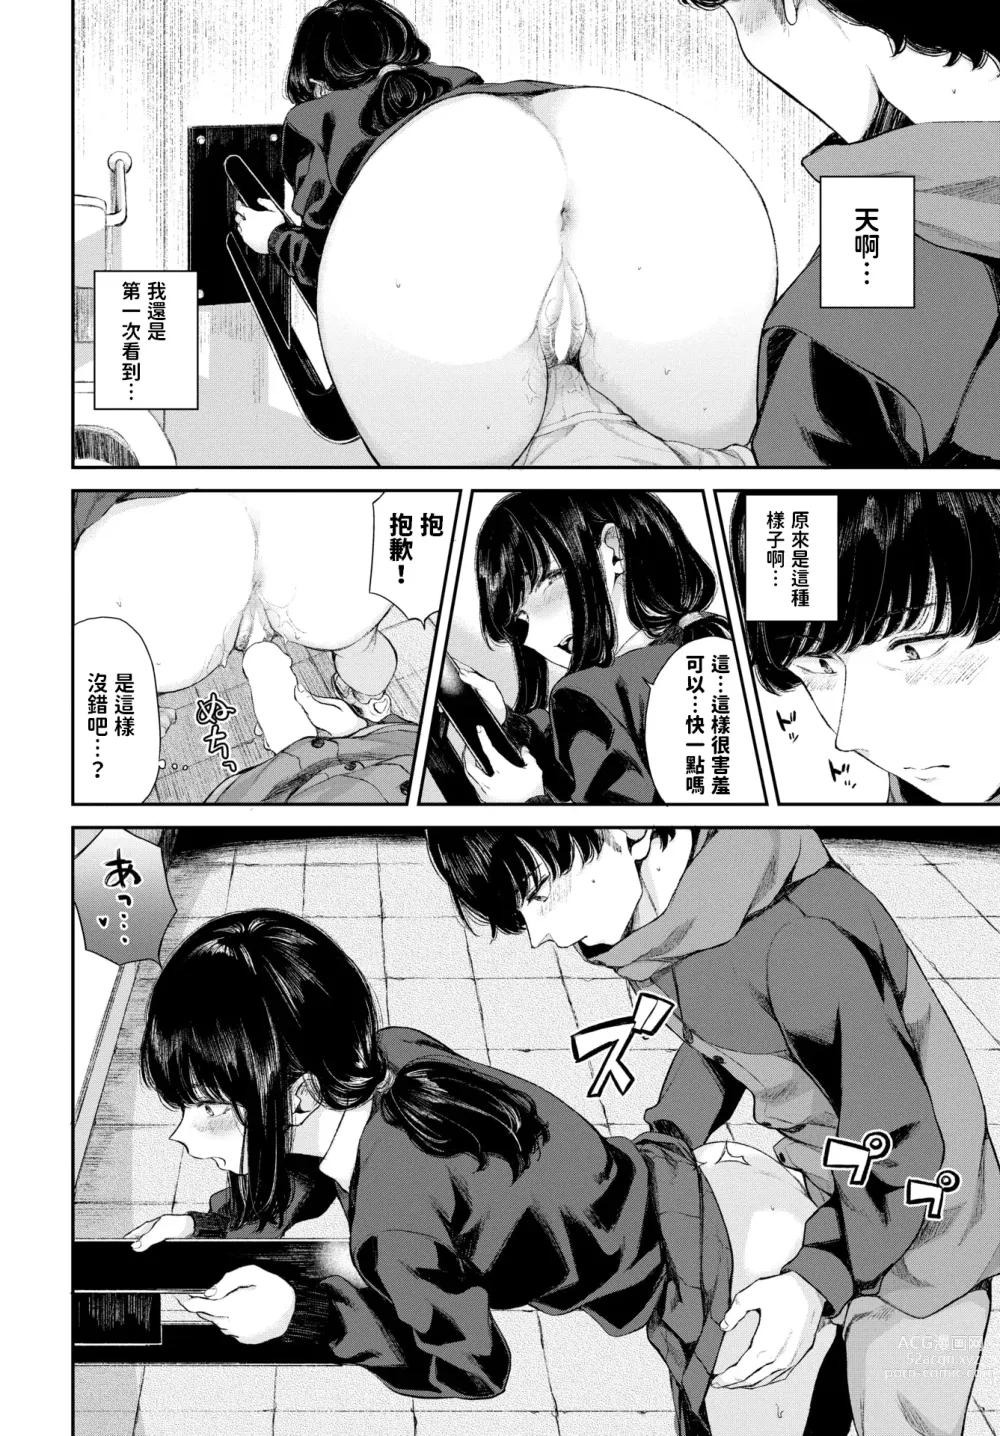 Page 12 of manga Yuki Zuri to Ao - passing by and blue.